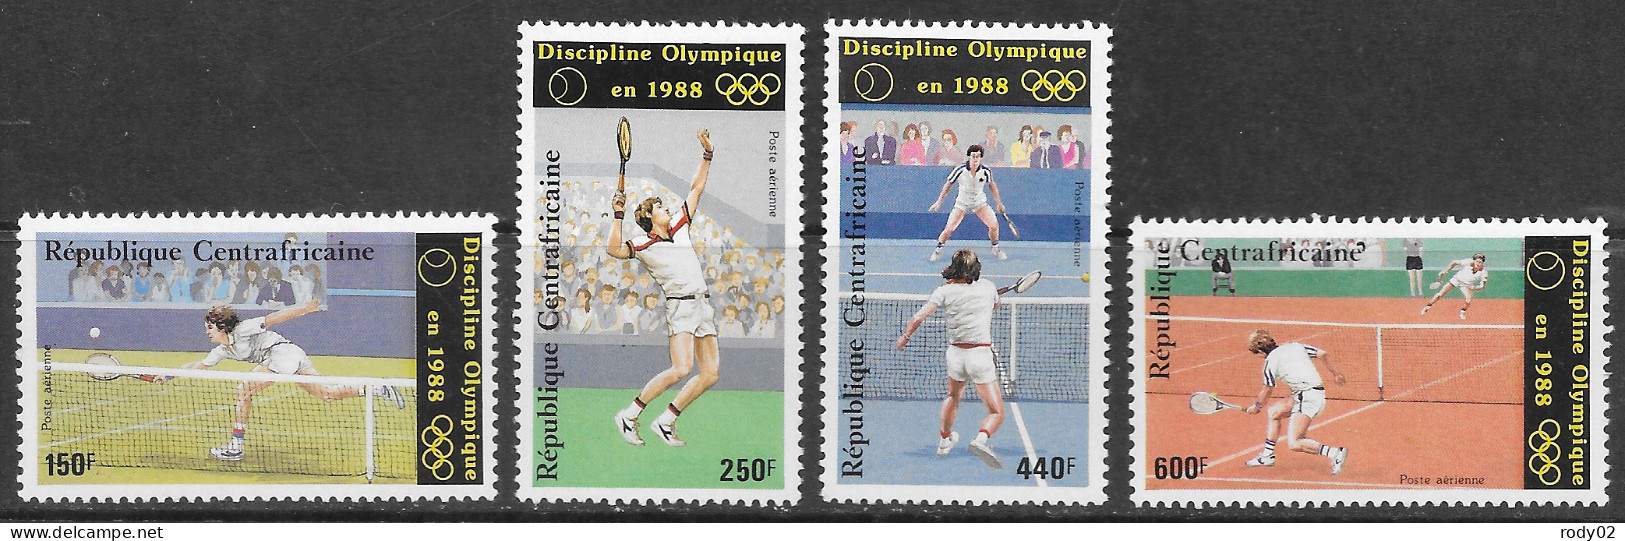 CENTRAFRIQUE - TENNIS - DISCIPLINE OLYMPIQUE - PA 353 A 356 - NEUF** MNH - Tennis